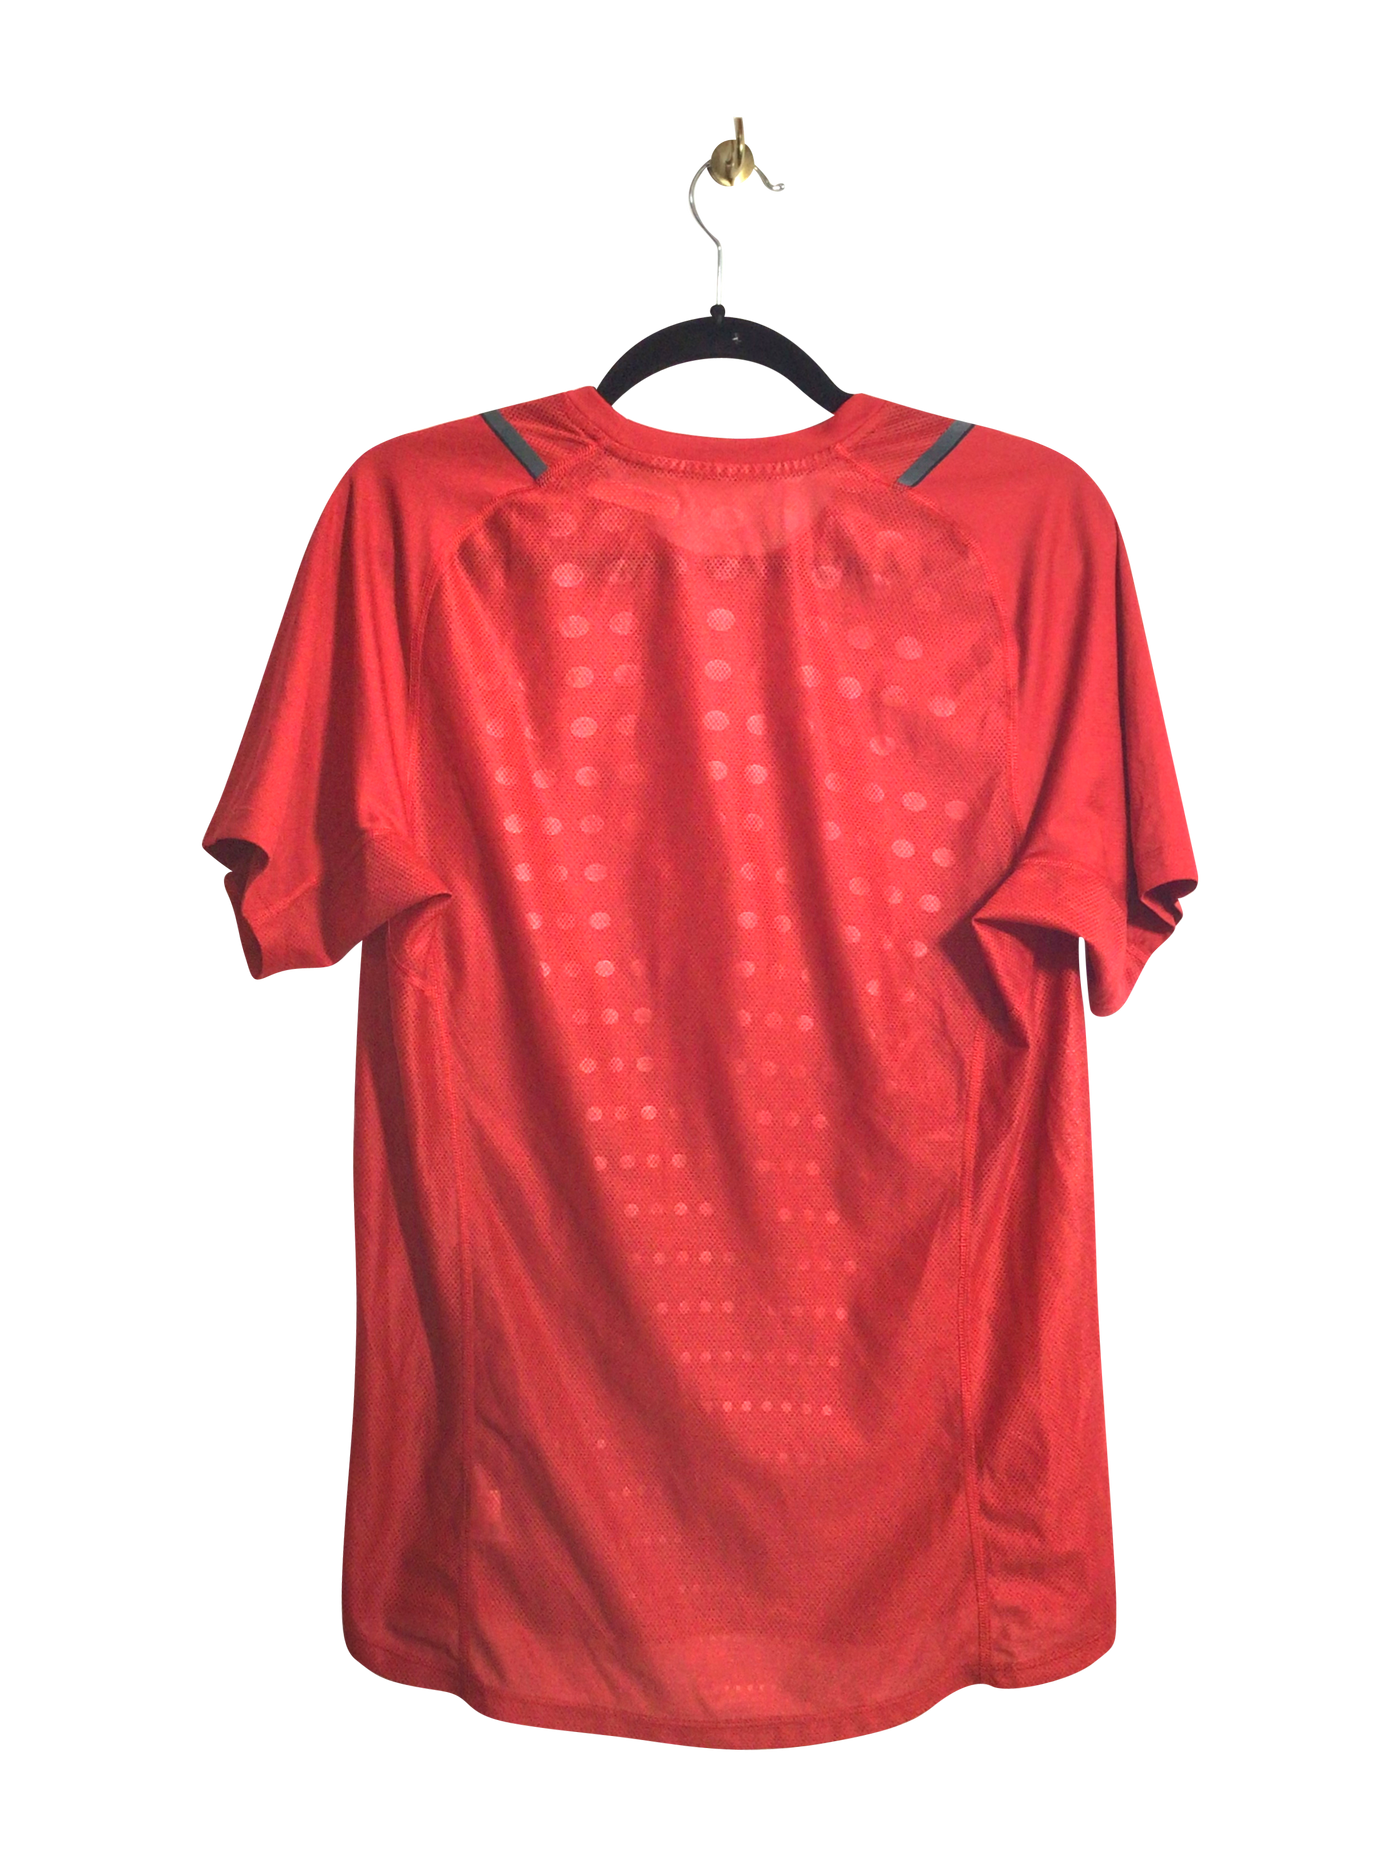 NIKE Men T-Shirts Regular fit in Red - Size M | 16.5 $ KOOP